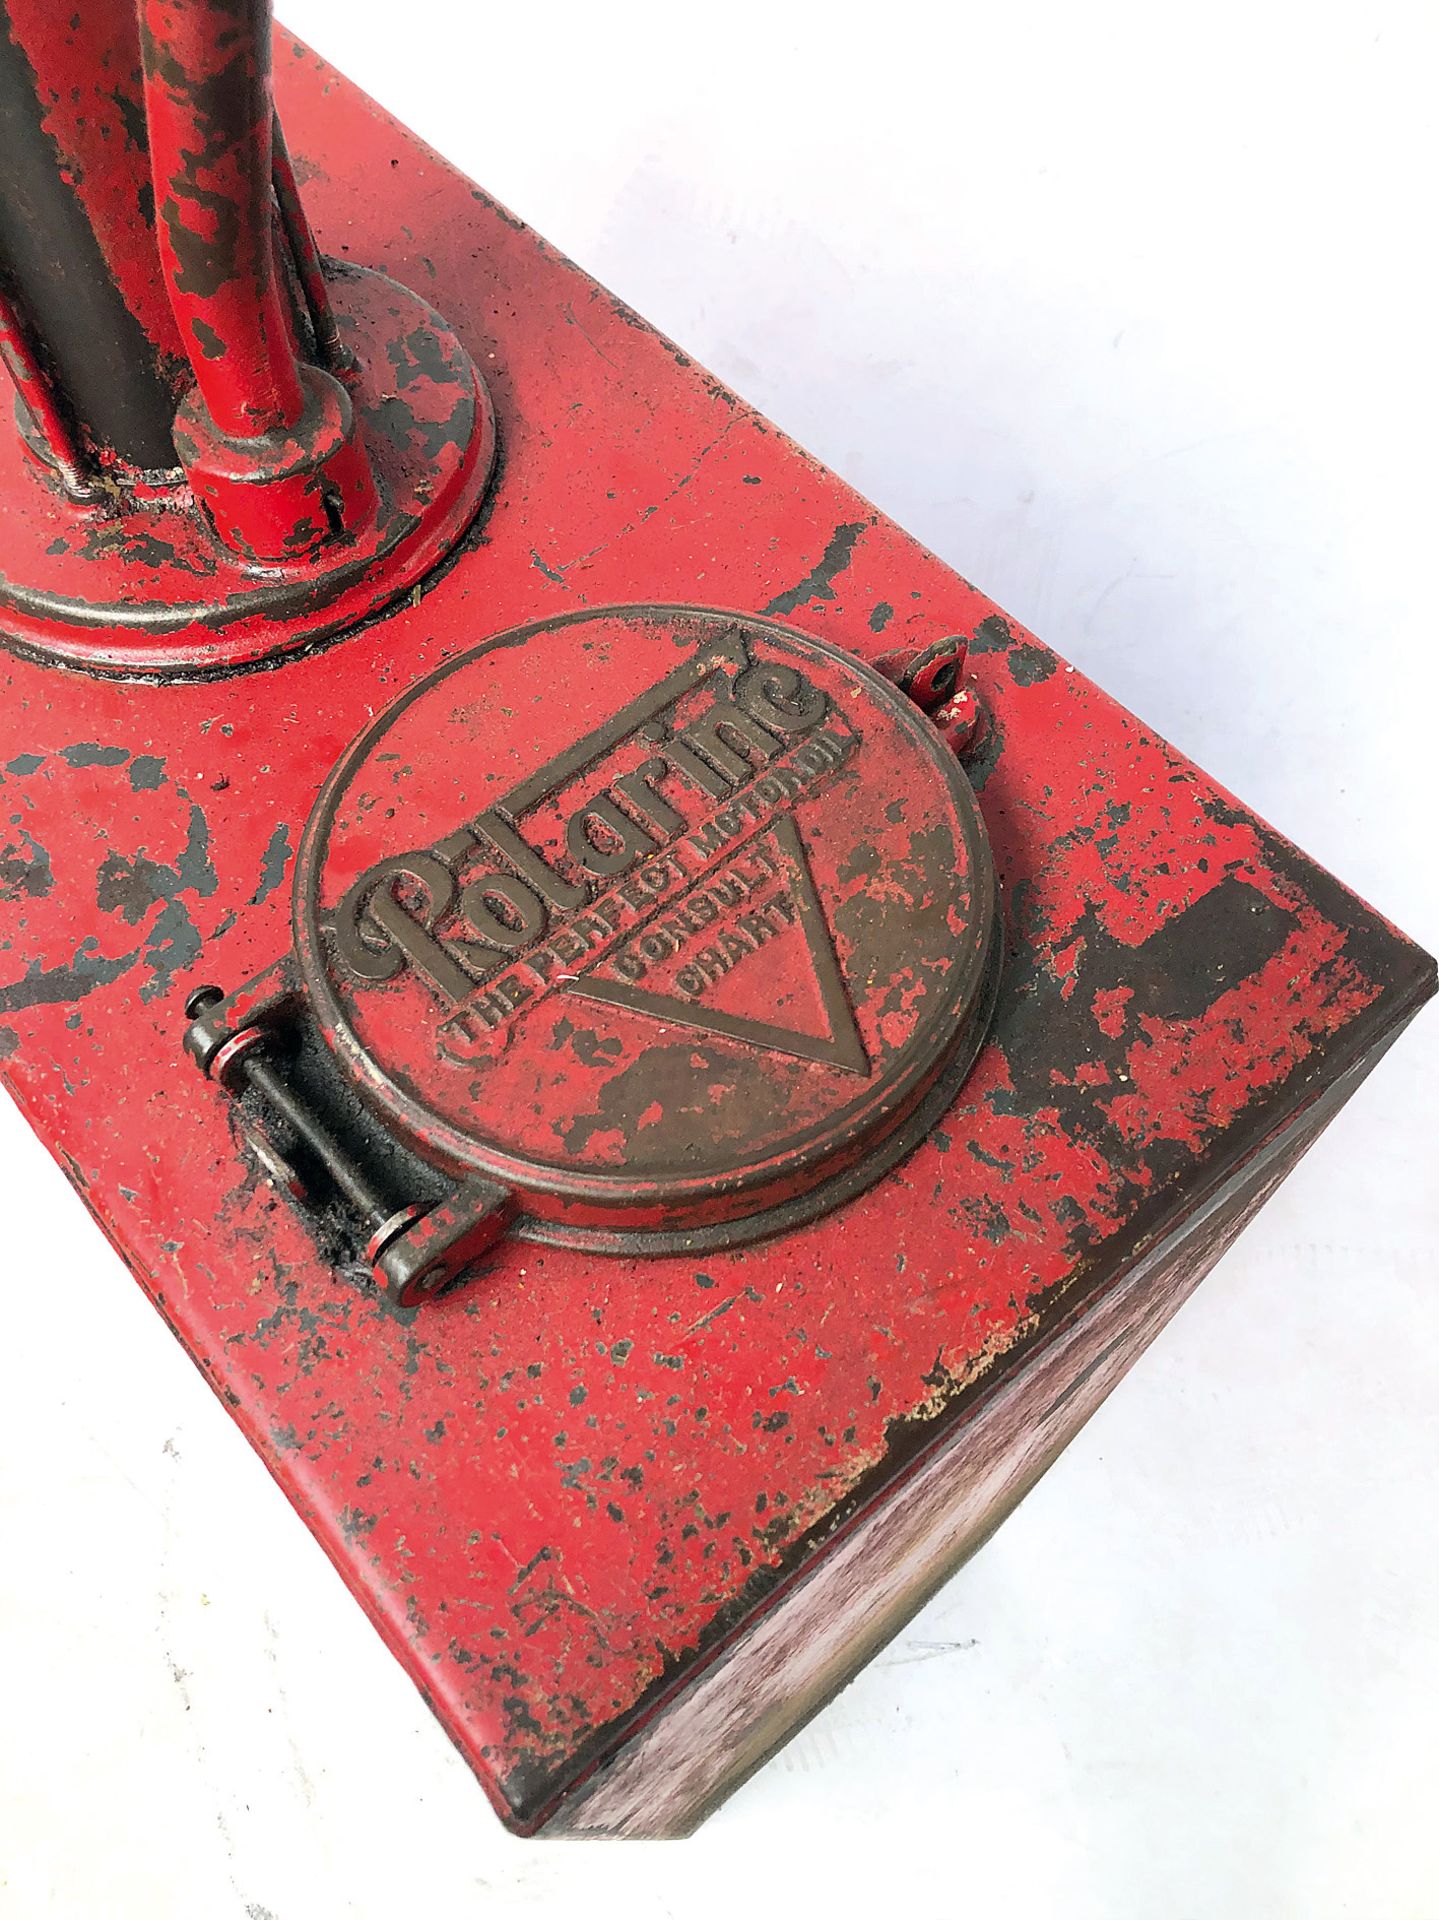 Original Vintage Polarine Oil Lubester Pump ca. 1930s - 40s - Image 3 of 4